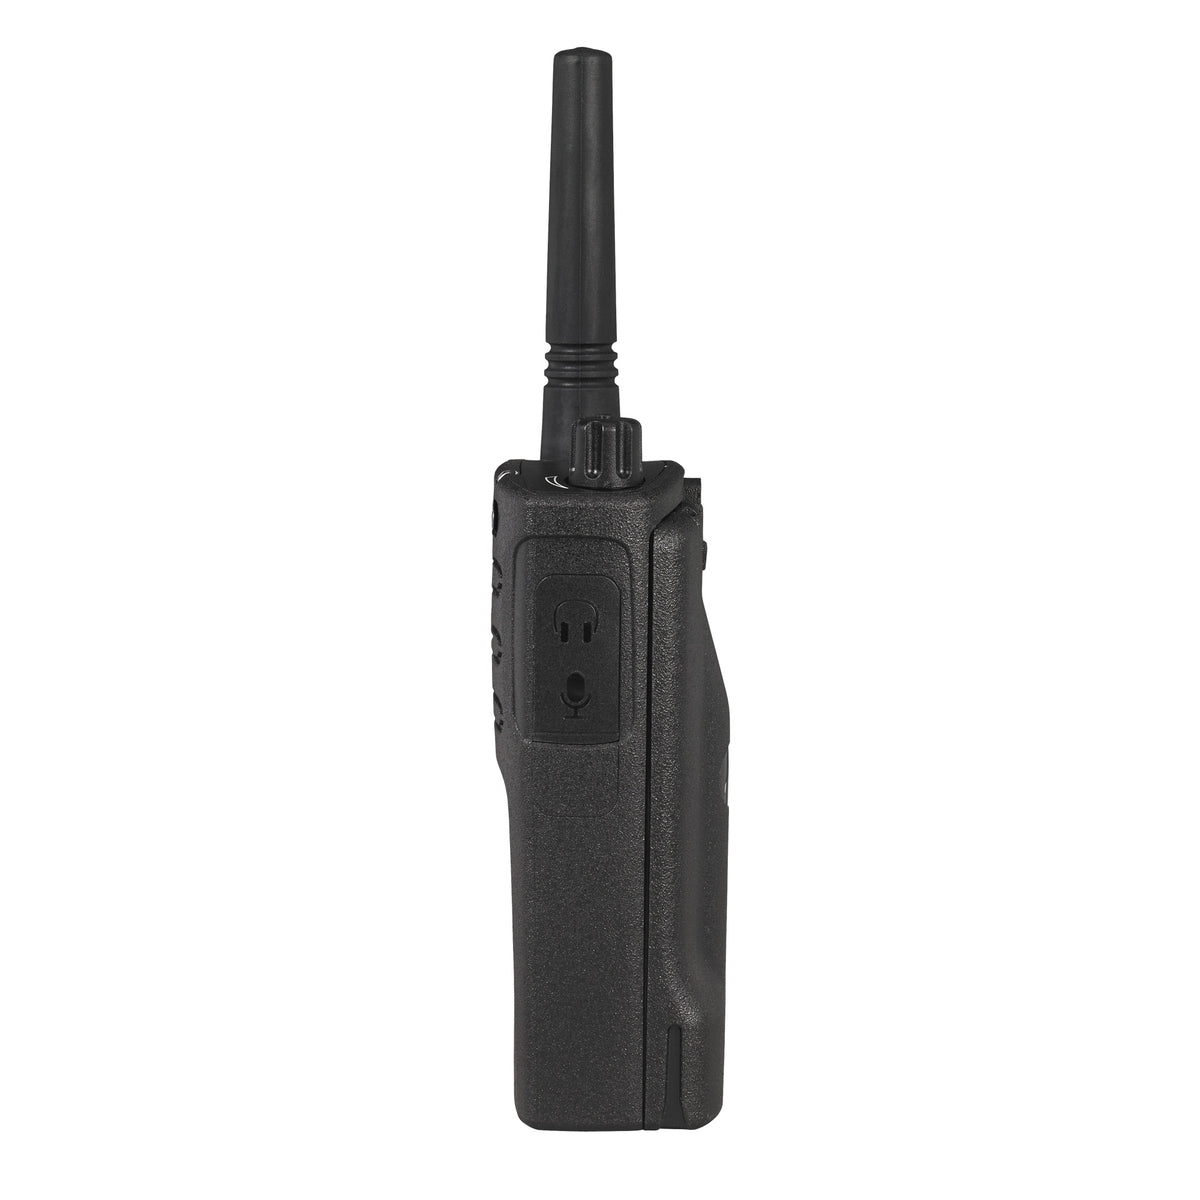 Motorola RMM2050 pack plus Multi Unit Charger plus Speaker Microphon|  TwoWayRadioGear